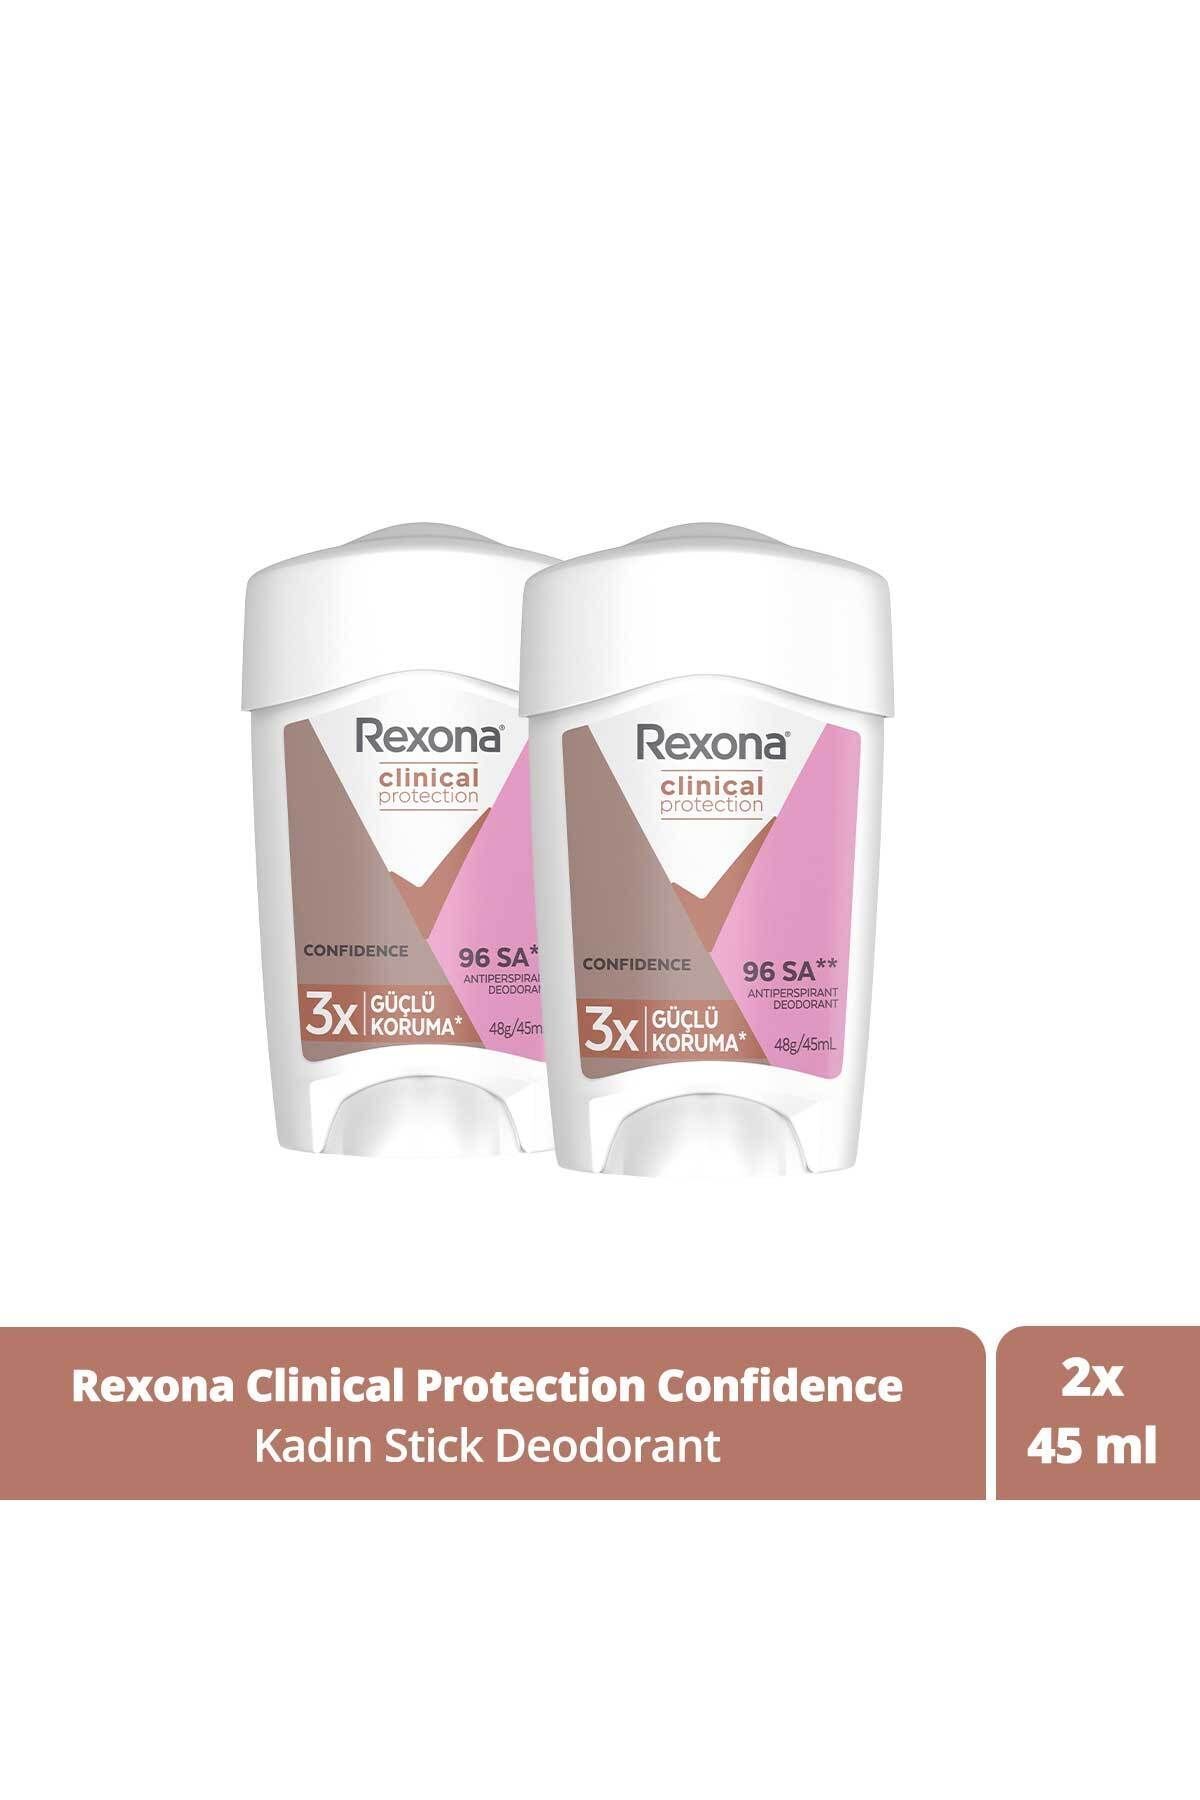 Rexona Clinical Protection Kadın Stick Deodorant Confidence 3x Güçlü Koruma 45 ml X2